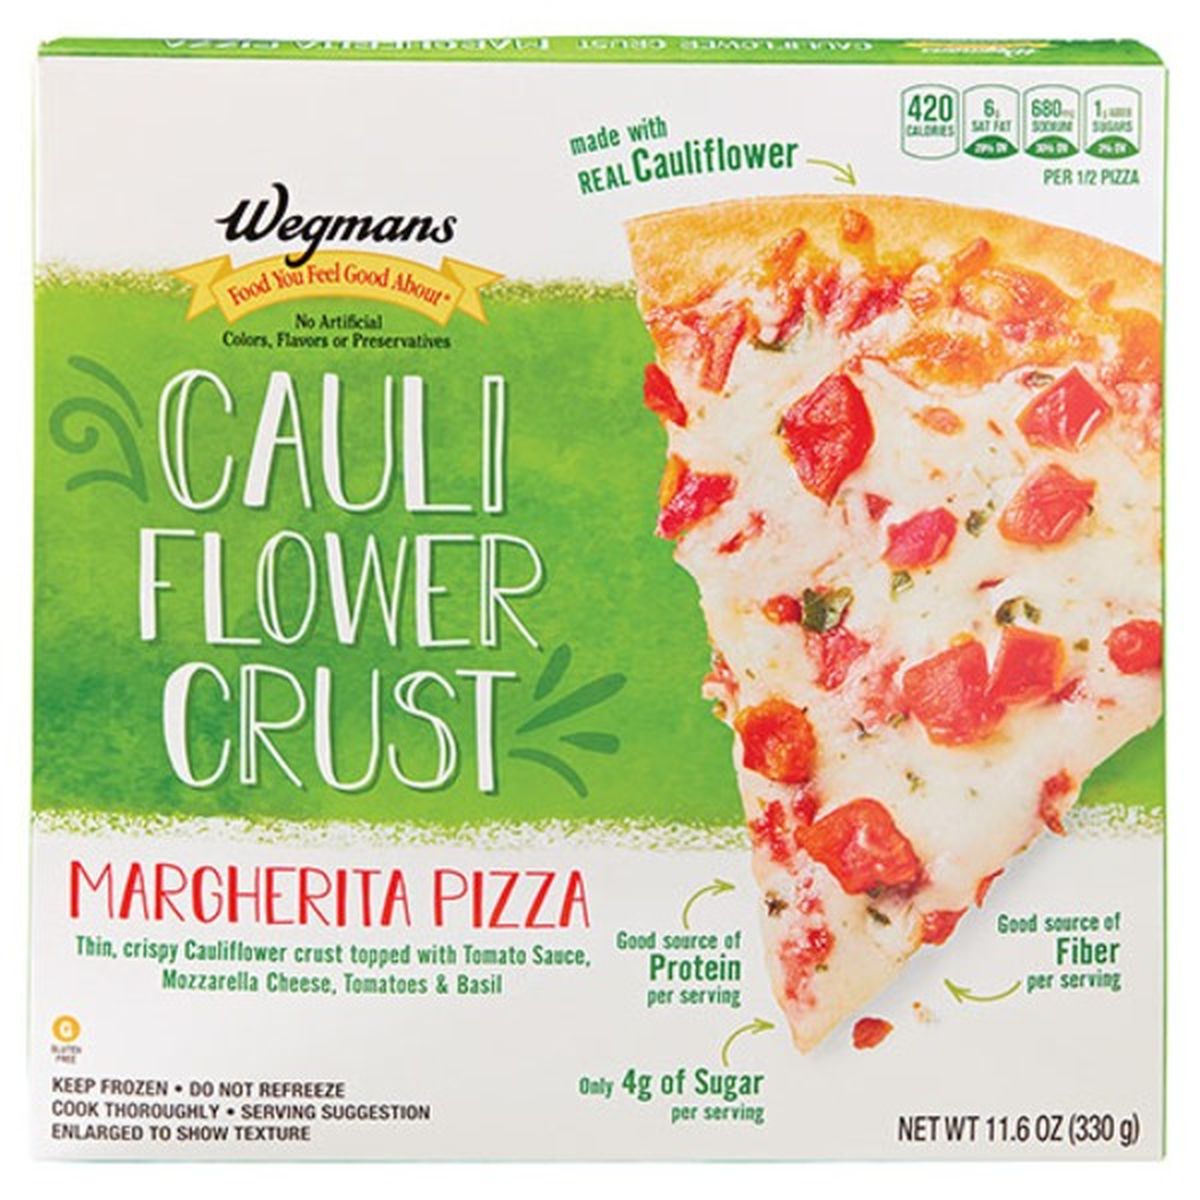 Calories in Wegmans Cauliflower Crust Pizza, Margherita